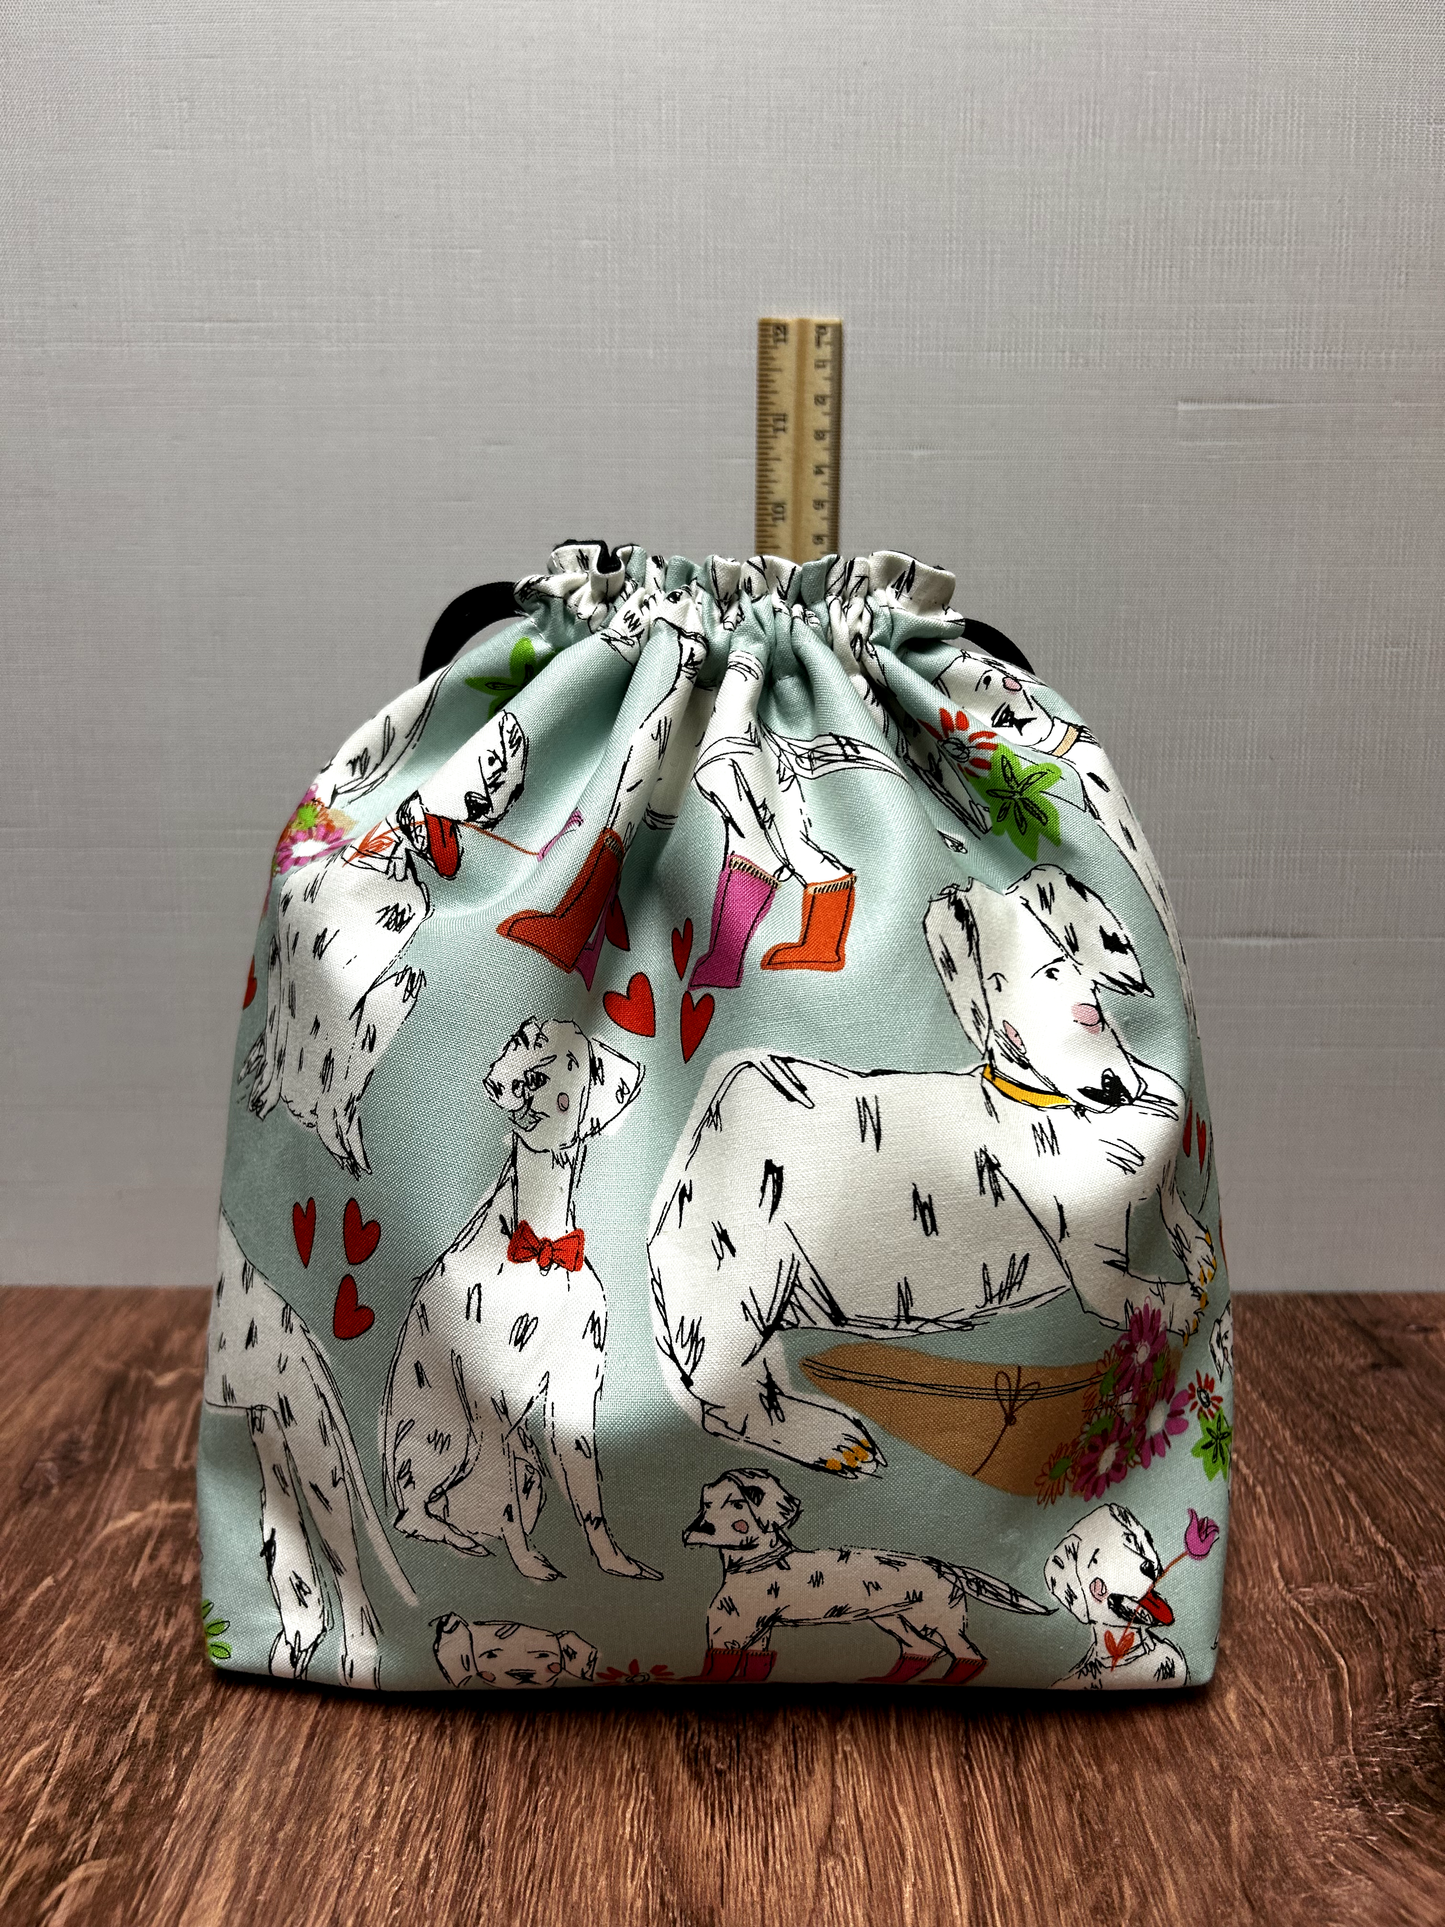 Dalmation Project Bag - Drawstring Bag – Crochet Bag - Knitting Bag - Cross Stitch Bag - Craft Bag - Bingo Bag - Dog